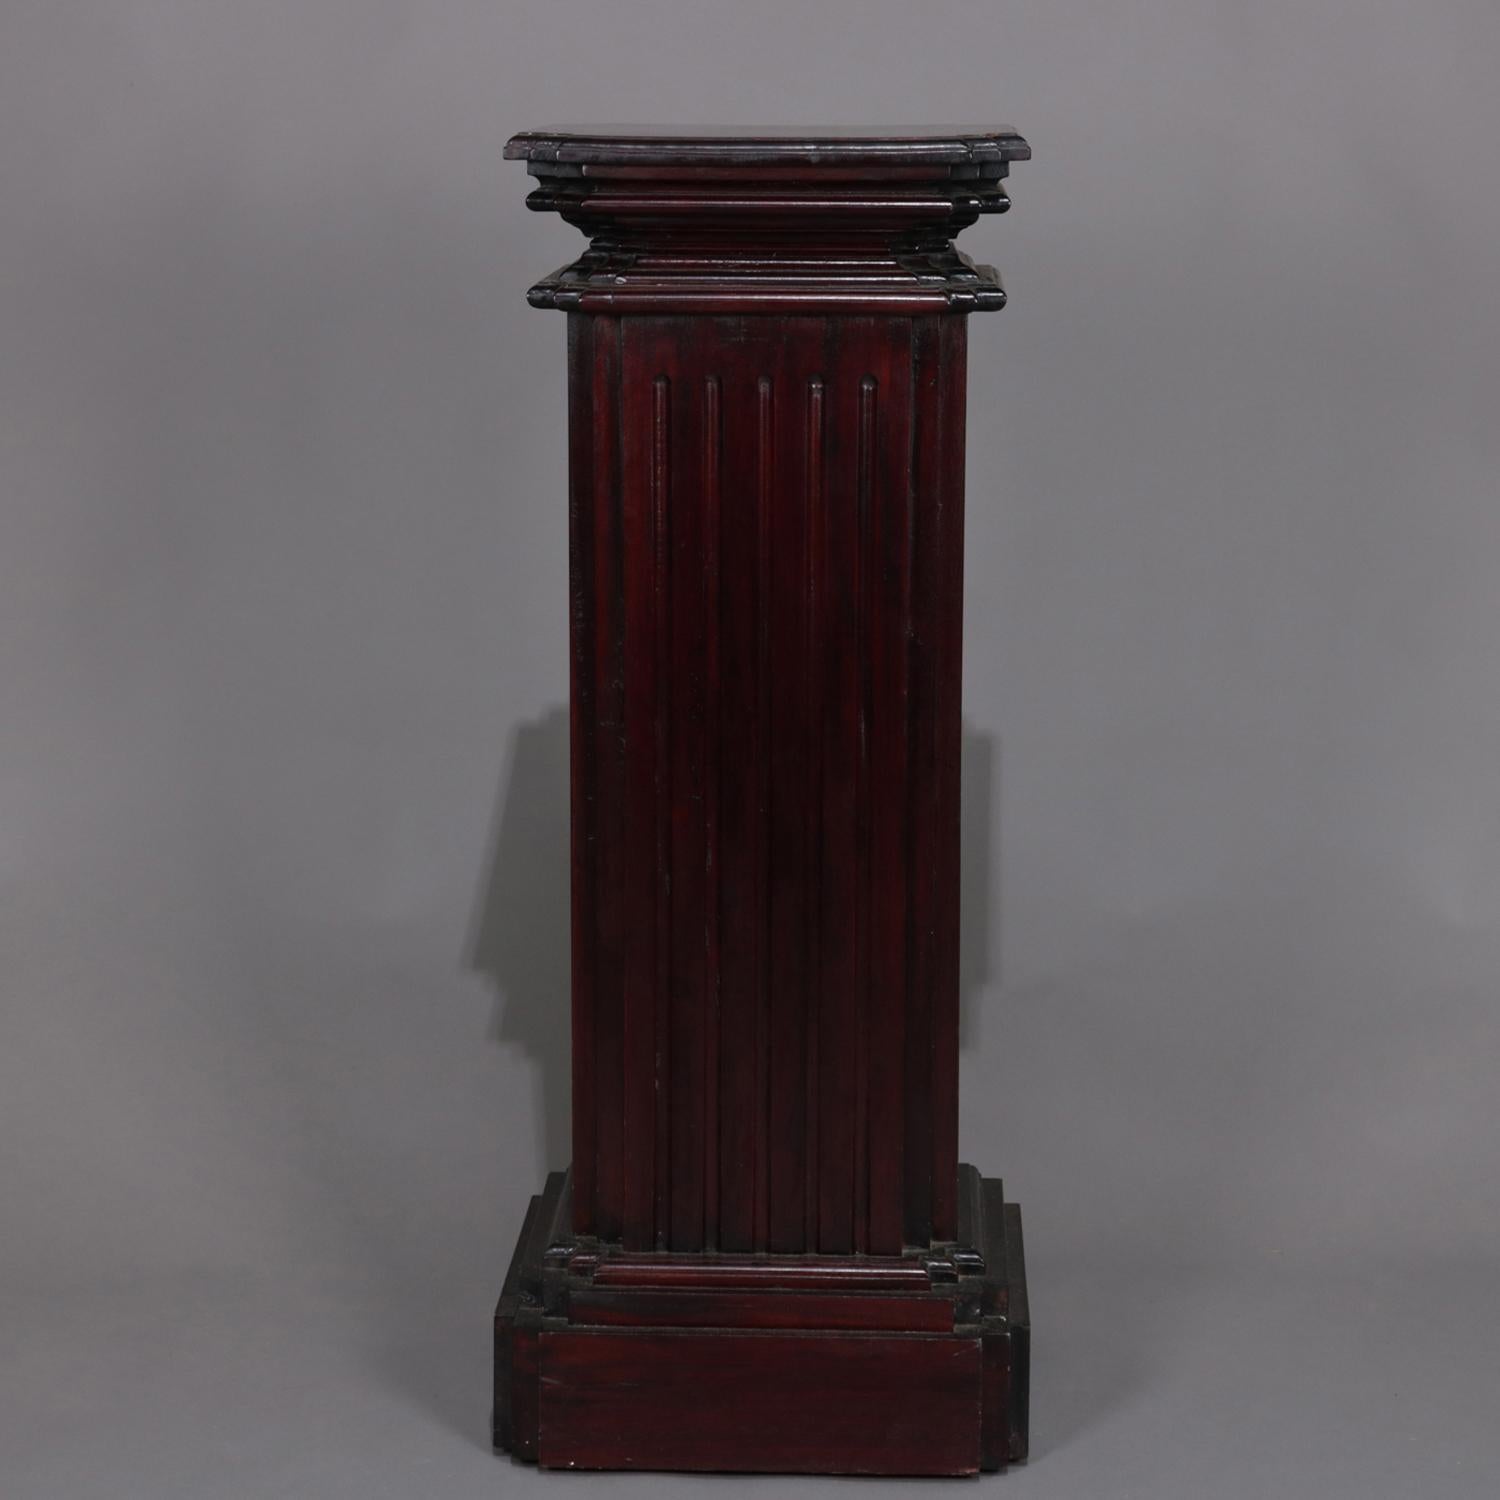 pedestals for sculpture display